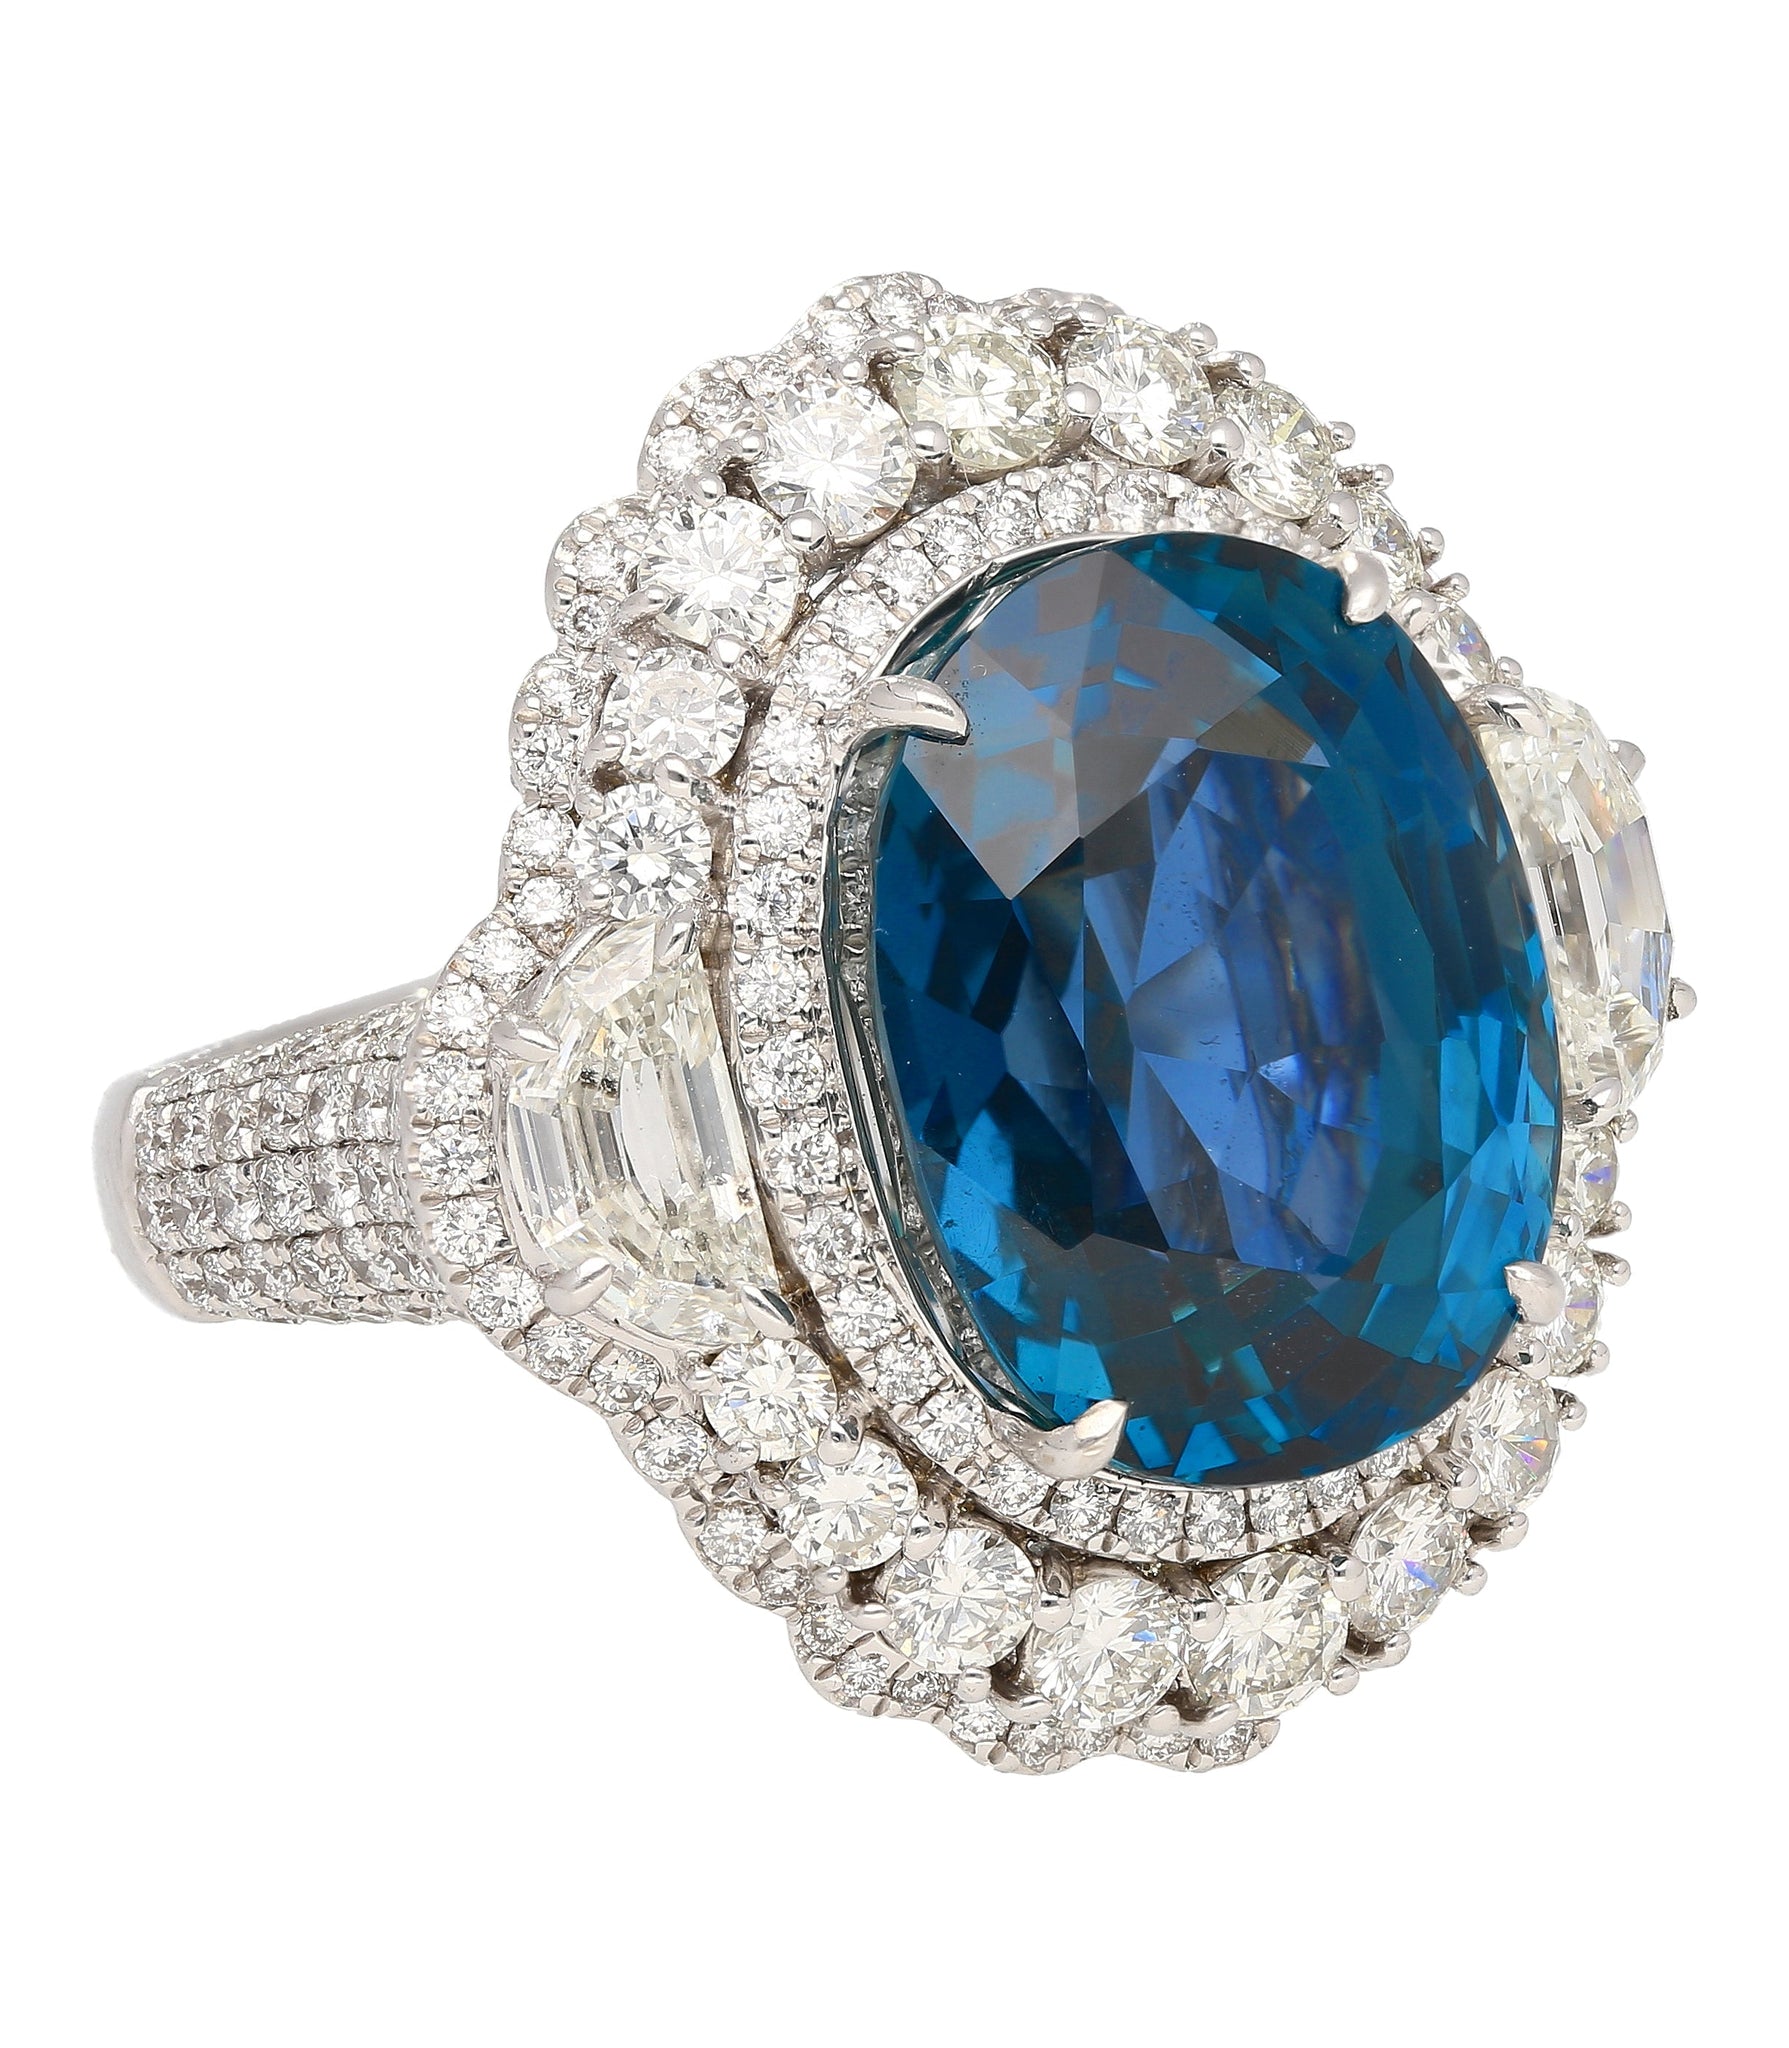 GRS Certified 18.16 Carat No Heat Mogok Burma Oval Cut Blue Sapphire and Diamond Ring